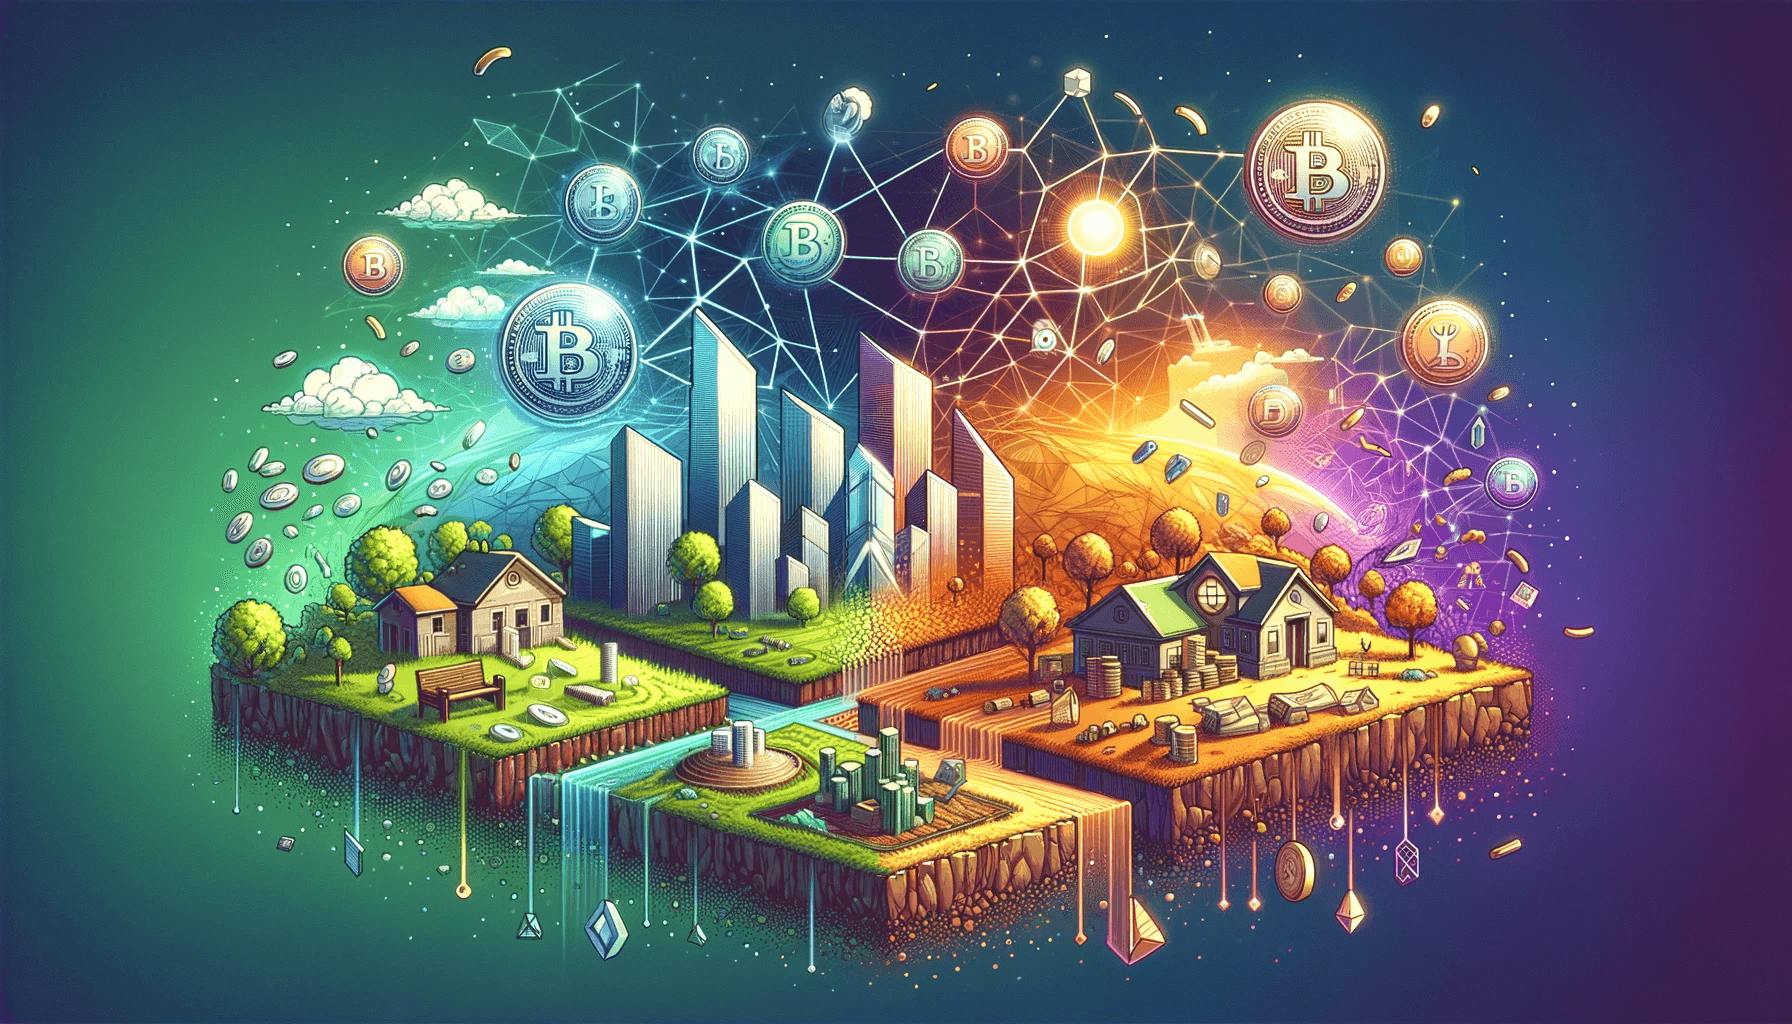 Symbolic representation of real world and blockchain